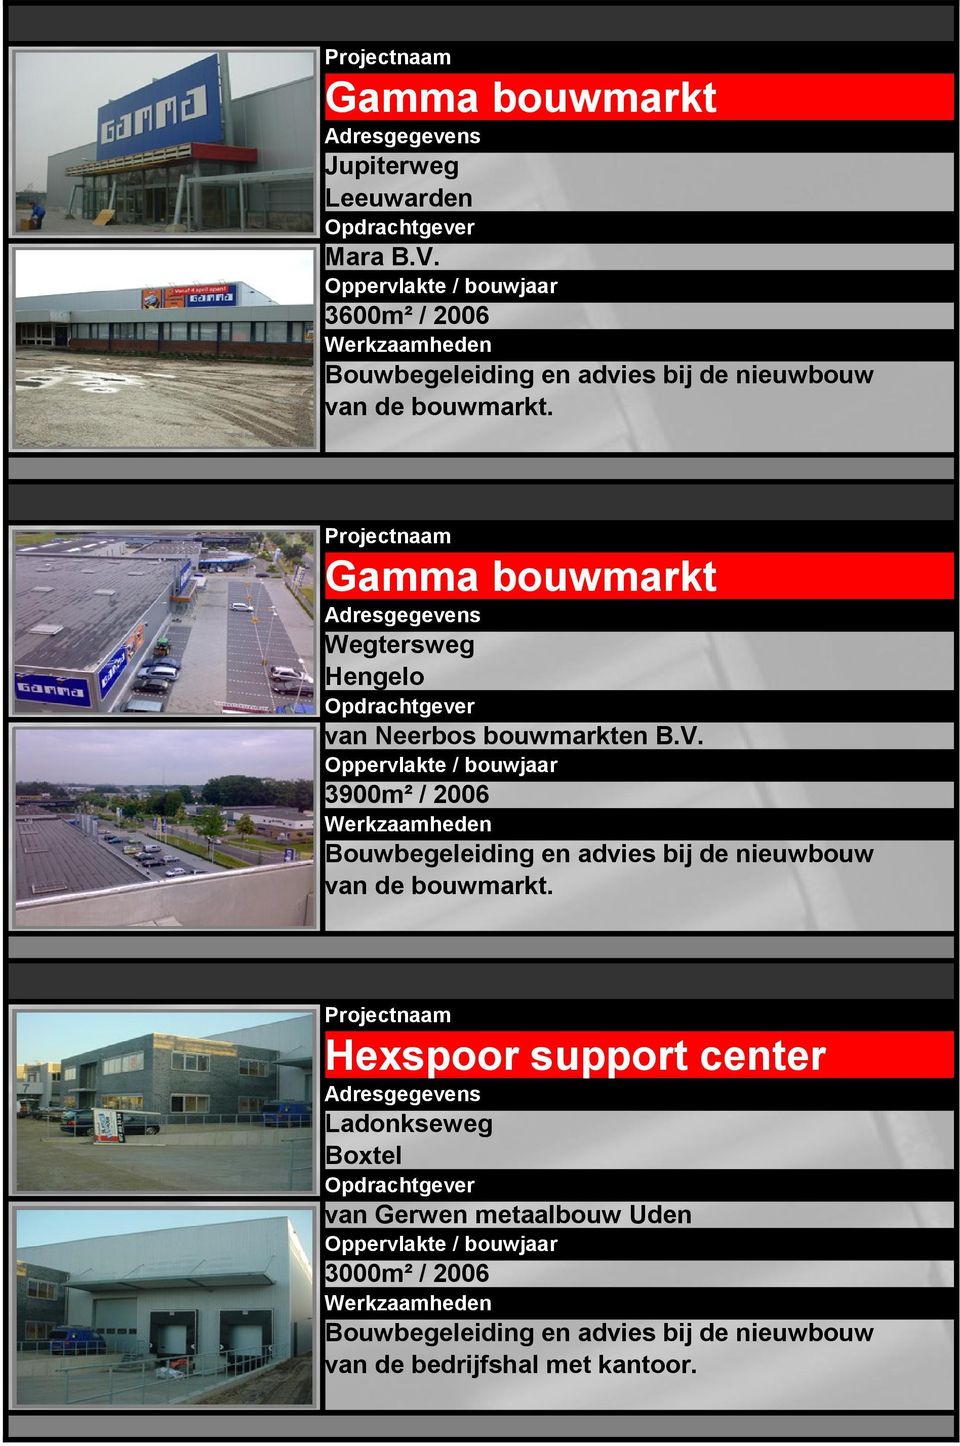 Hexspoor support center Ladonkseweg Boxtel van